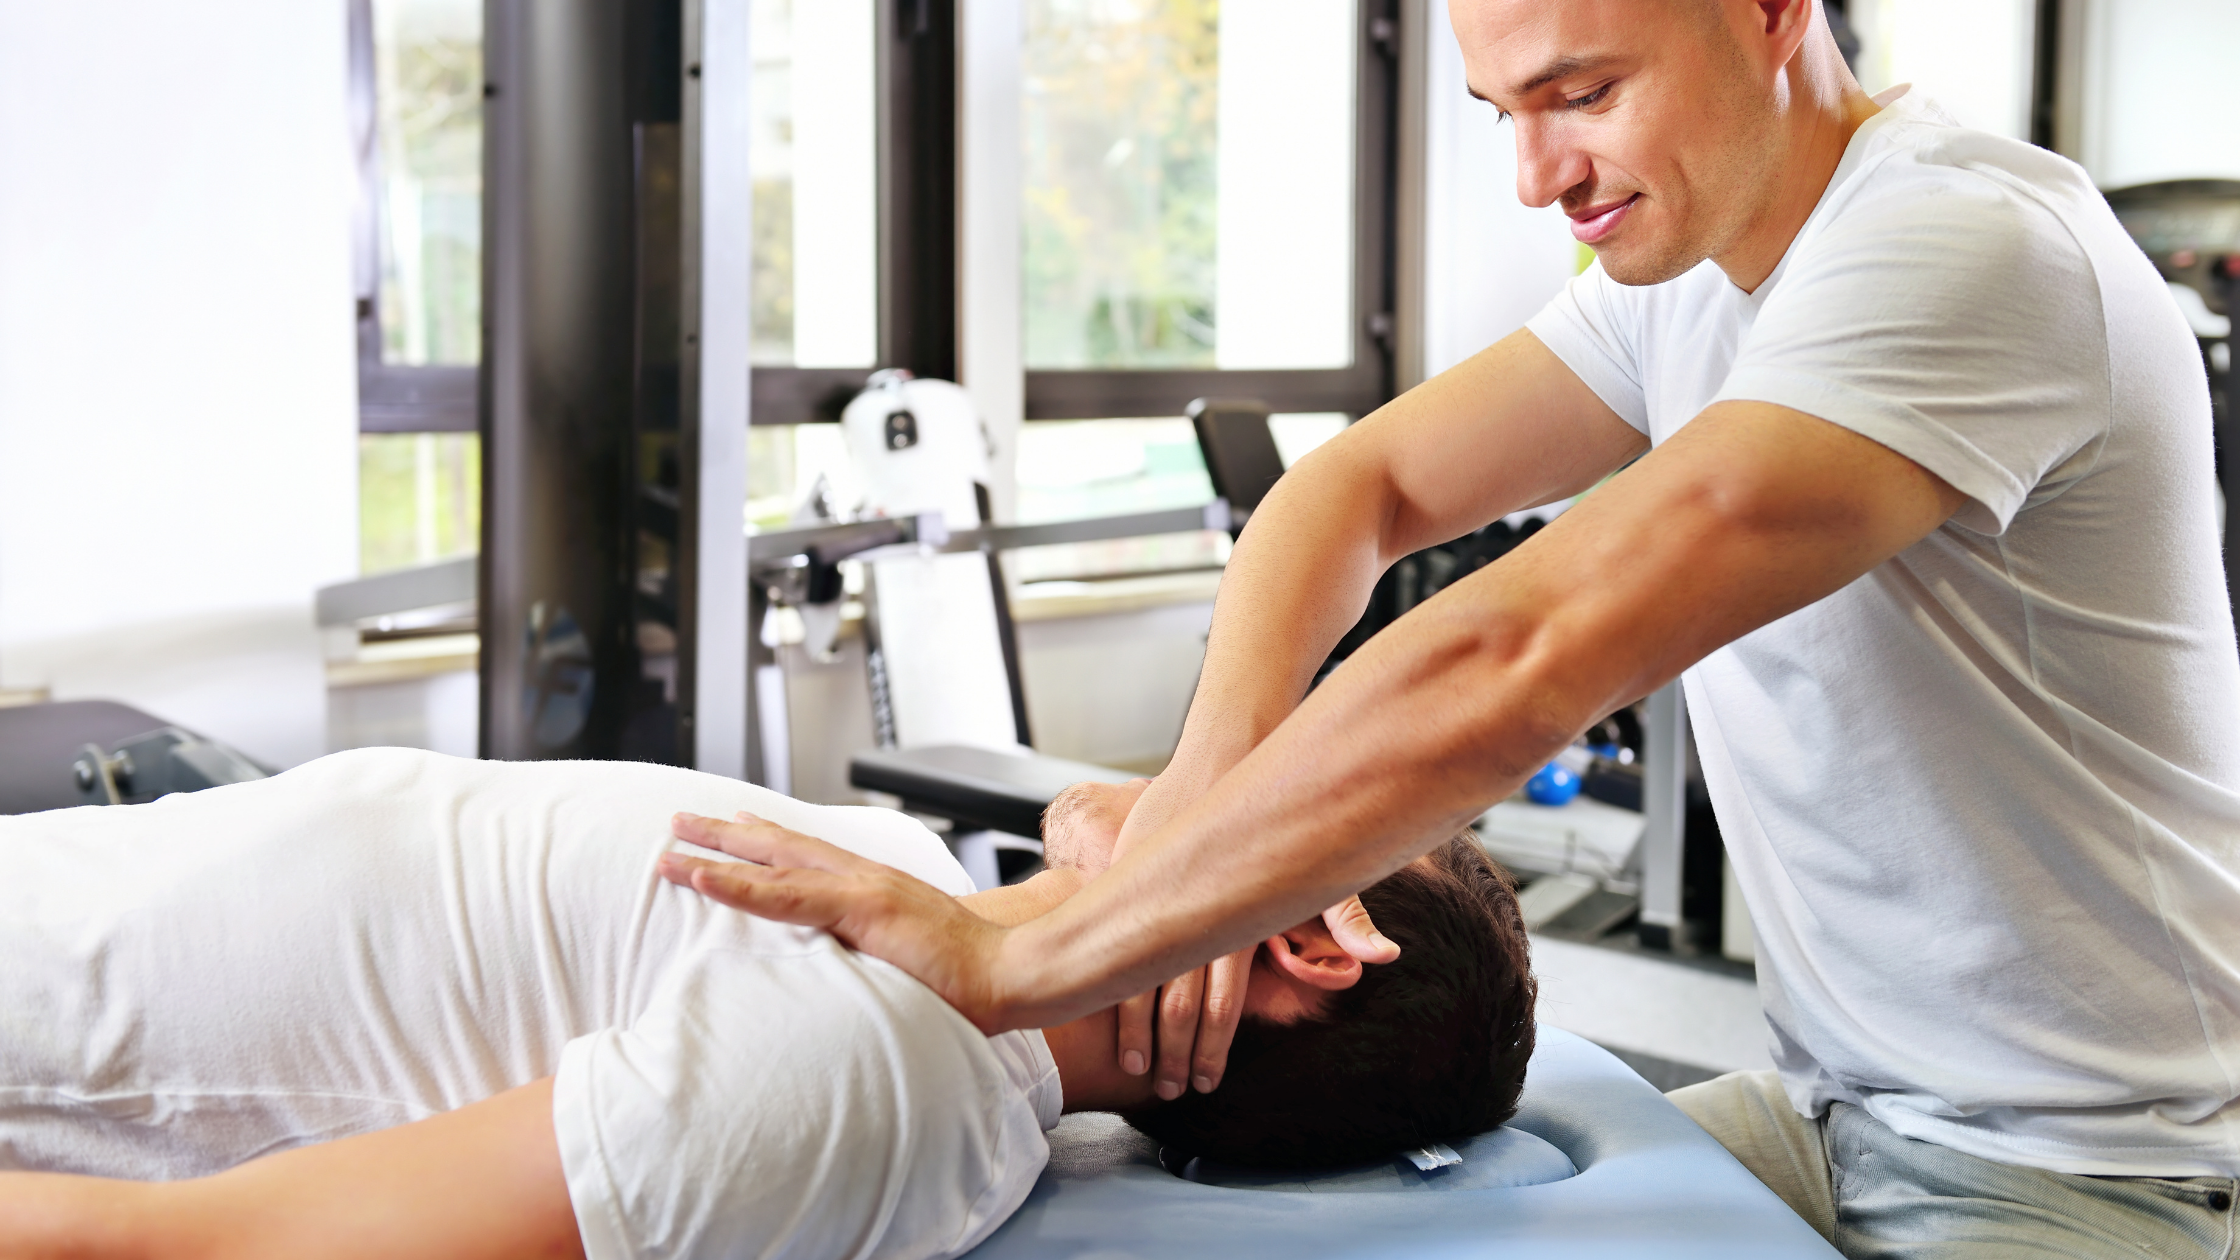 Markus massage. Спортивный массаж. Массаж и спорт. Аппарат спортивный массаж. Восстановительный массаж в спорте.